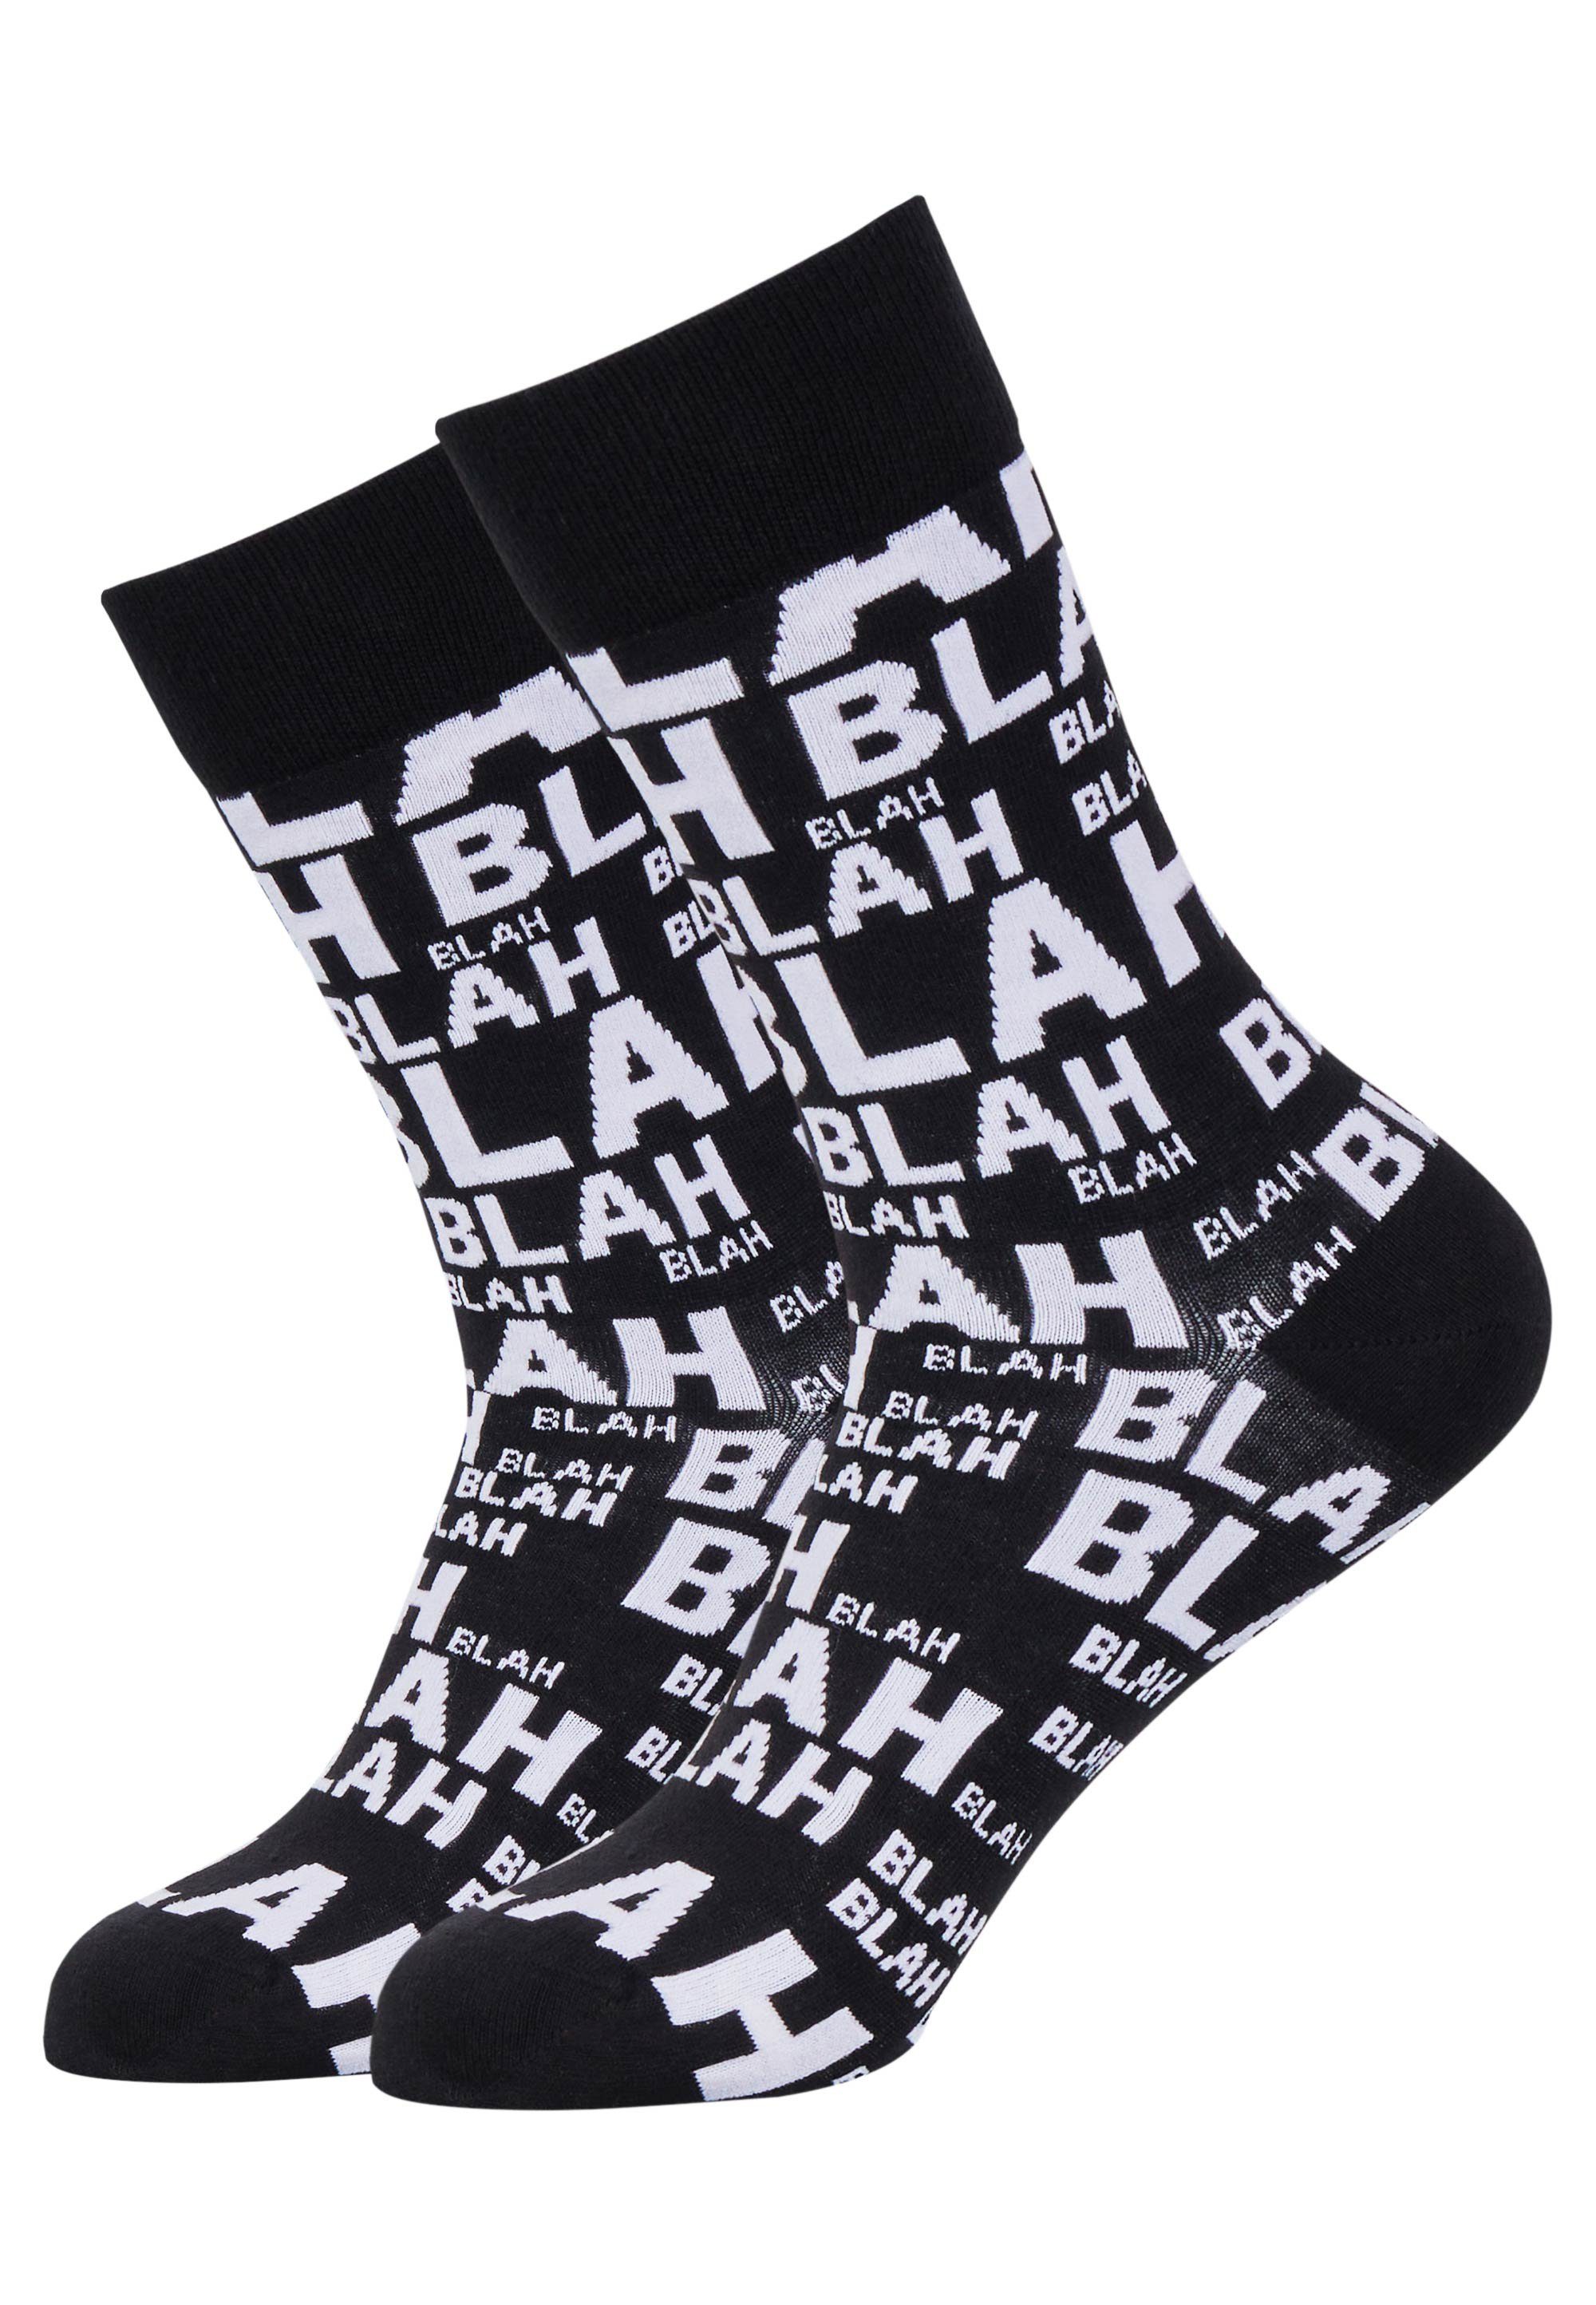 BLAH-BLAH UNHINGED Schriftzug mit dunkelgrau, Mxthersocker schwarz - trendigem (3-Paar) Socken